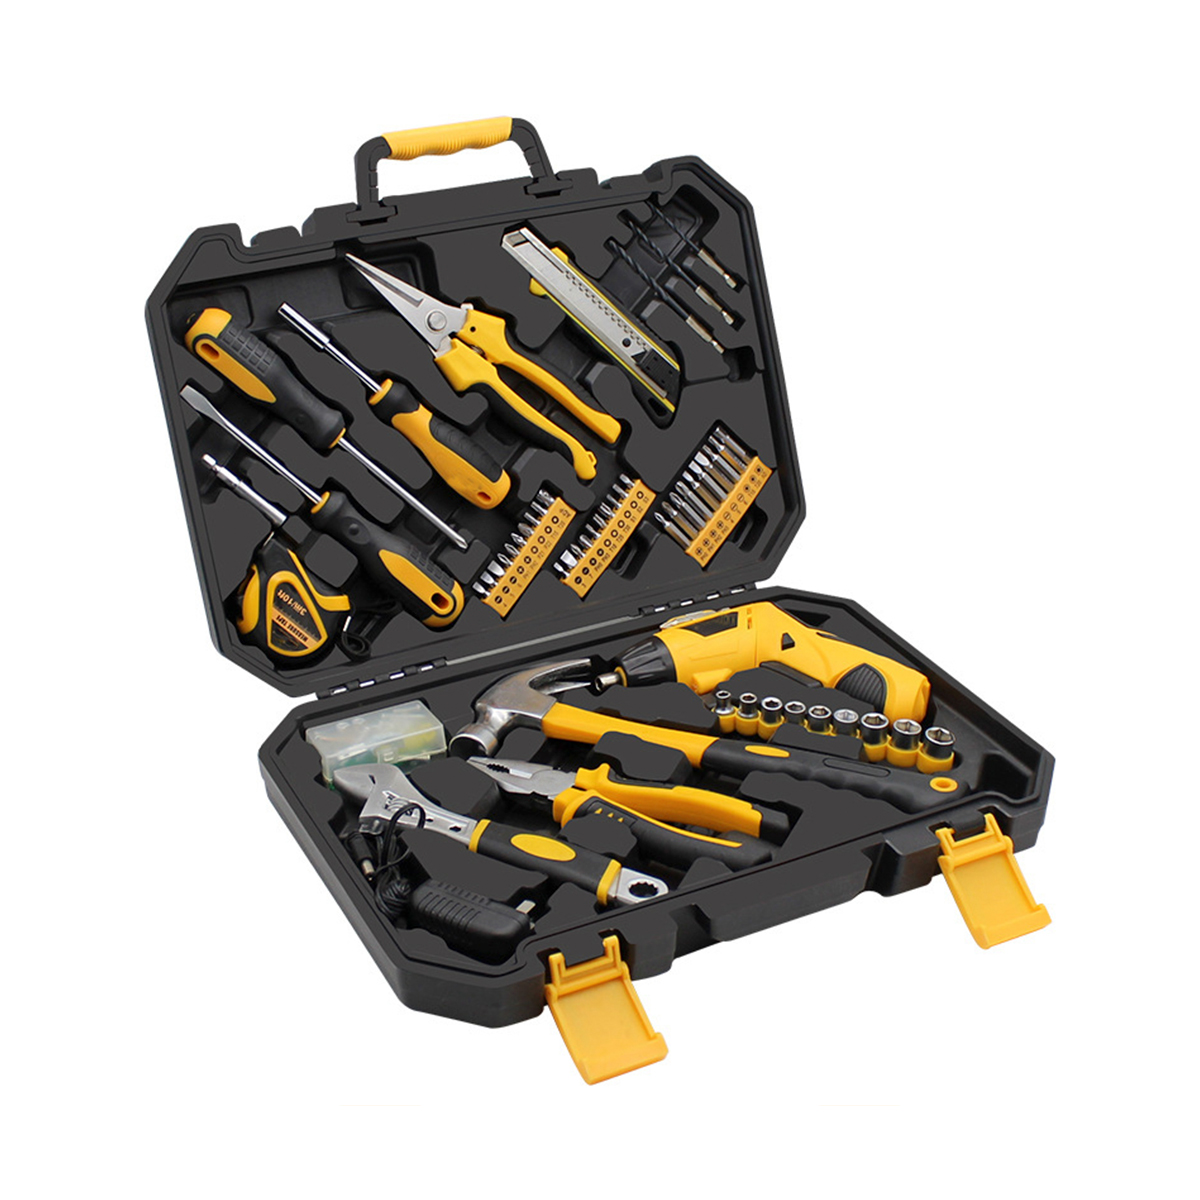 95pcs deducto Manu Tools Box Set Home Household Tool Kit